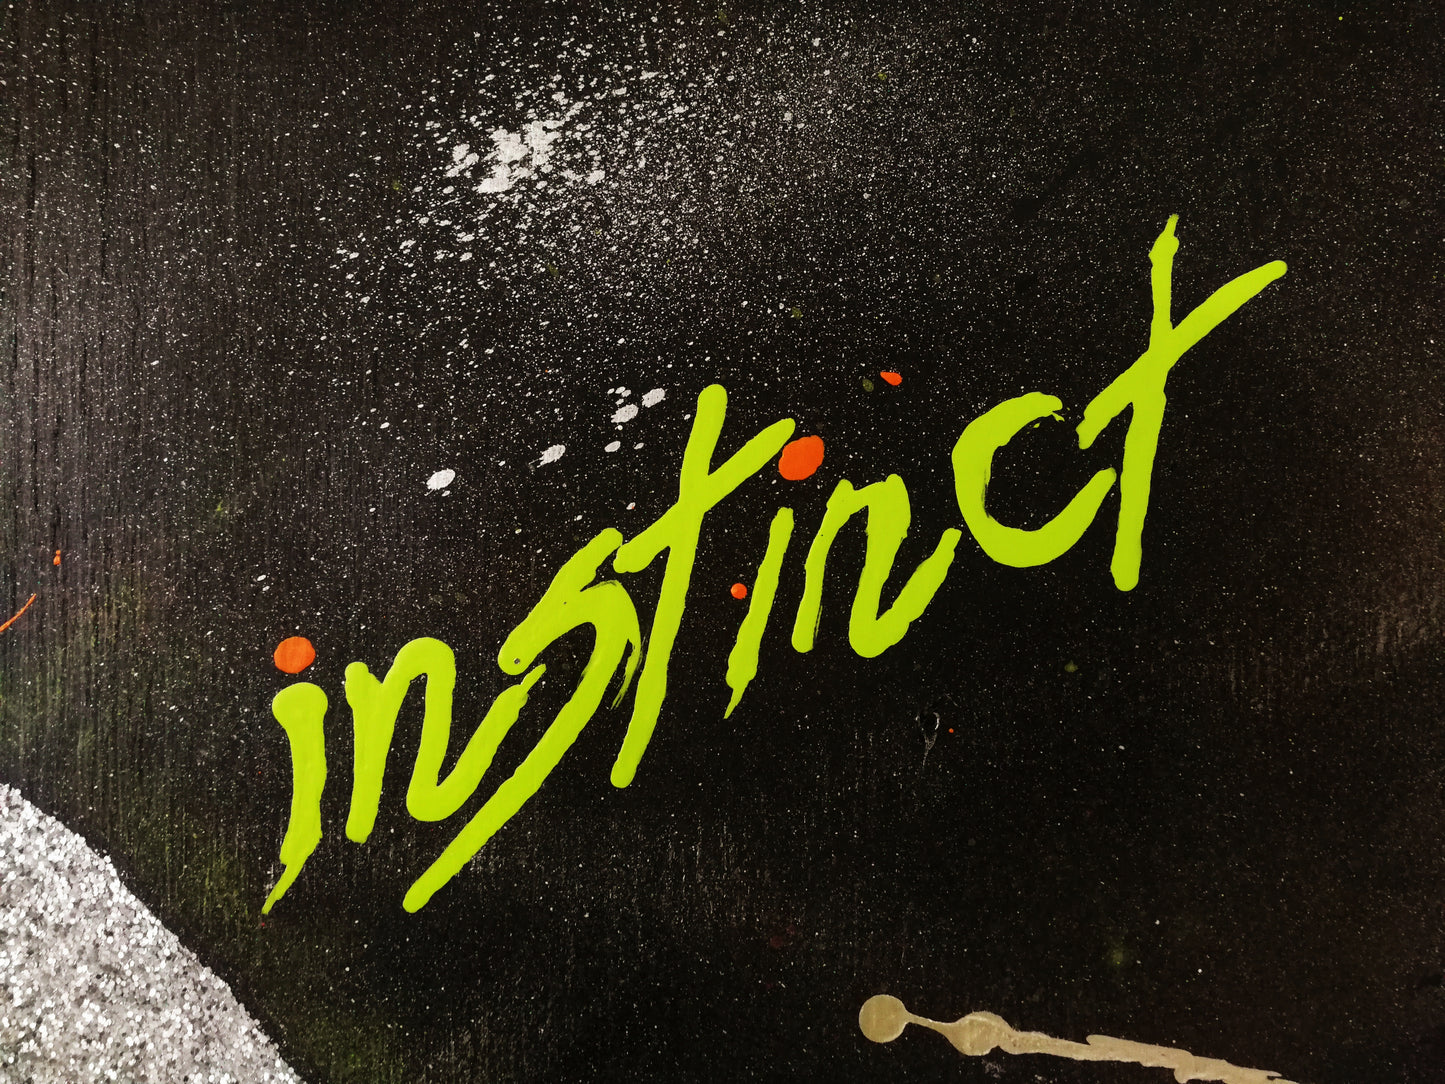 Instinct no. 1